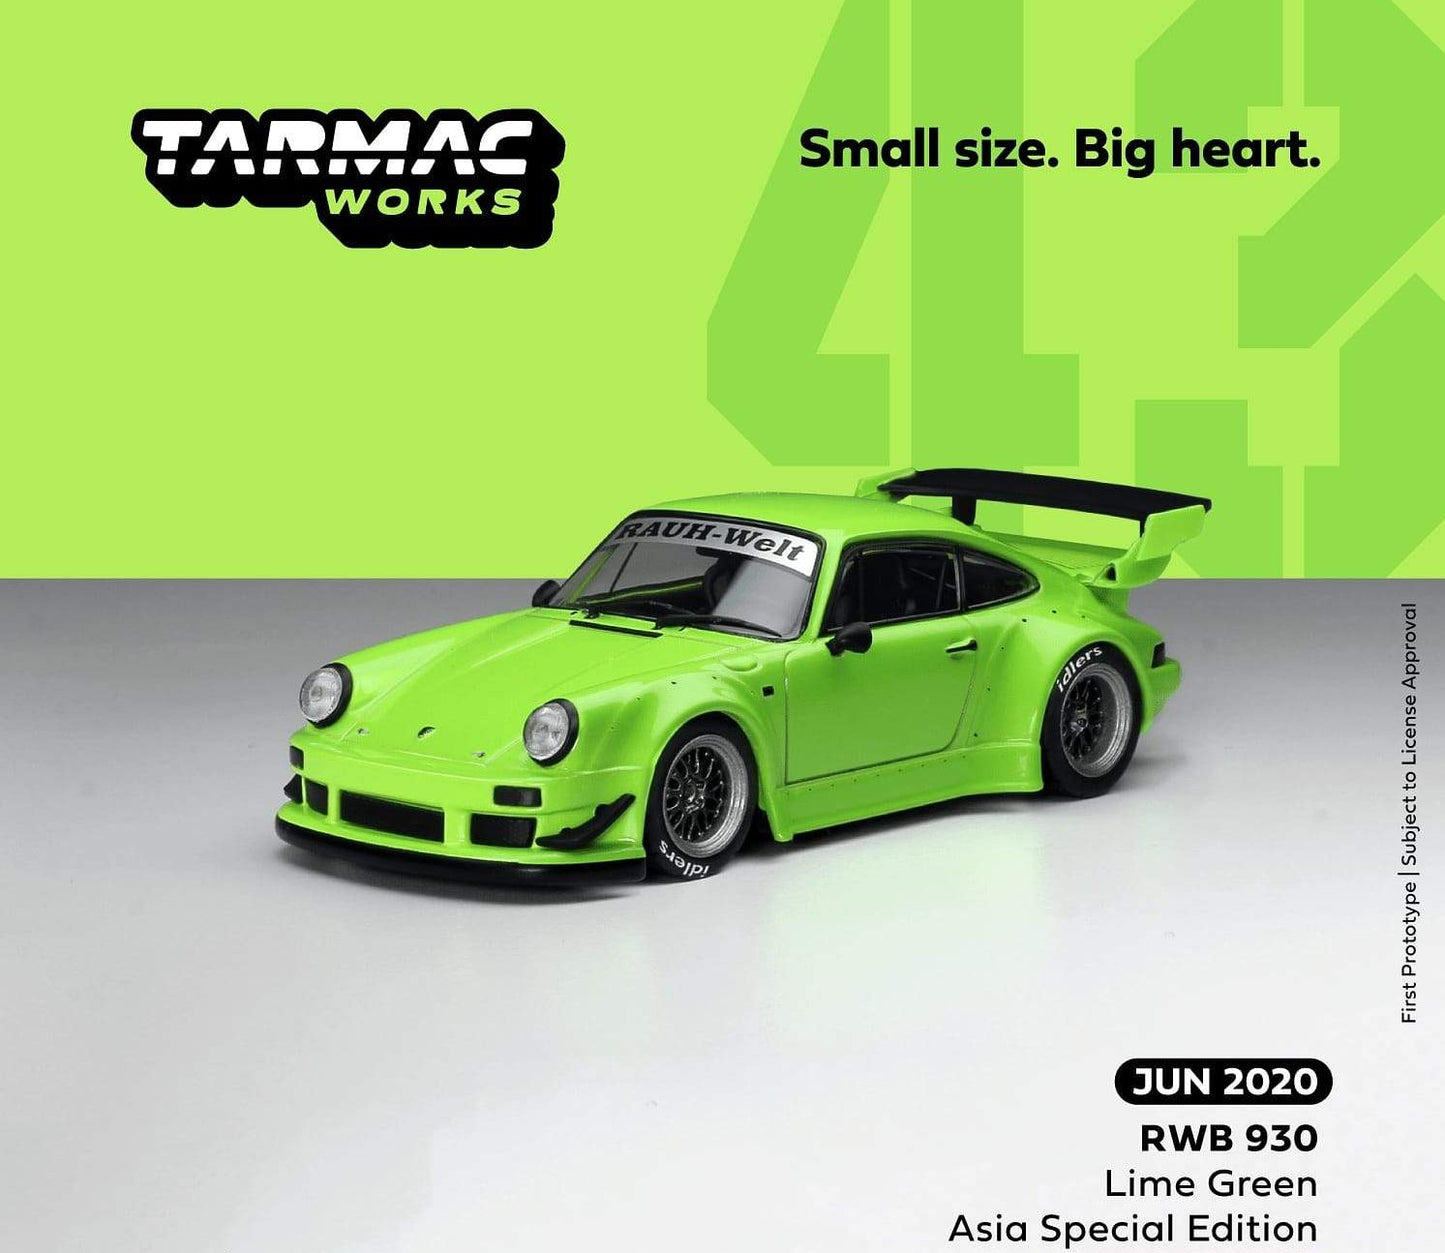 Tarmacworks 1:43 Scale RWB 930 Lime Green